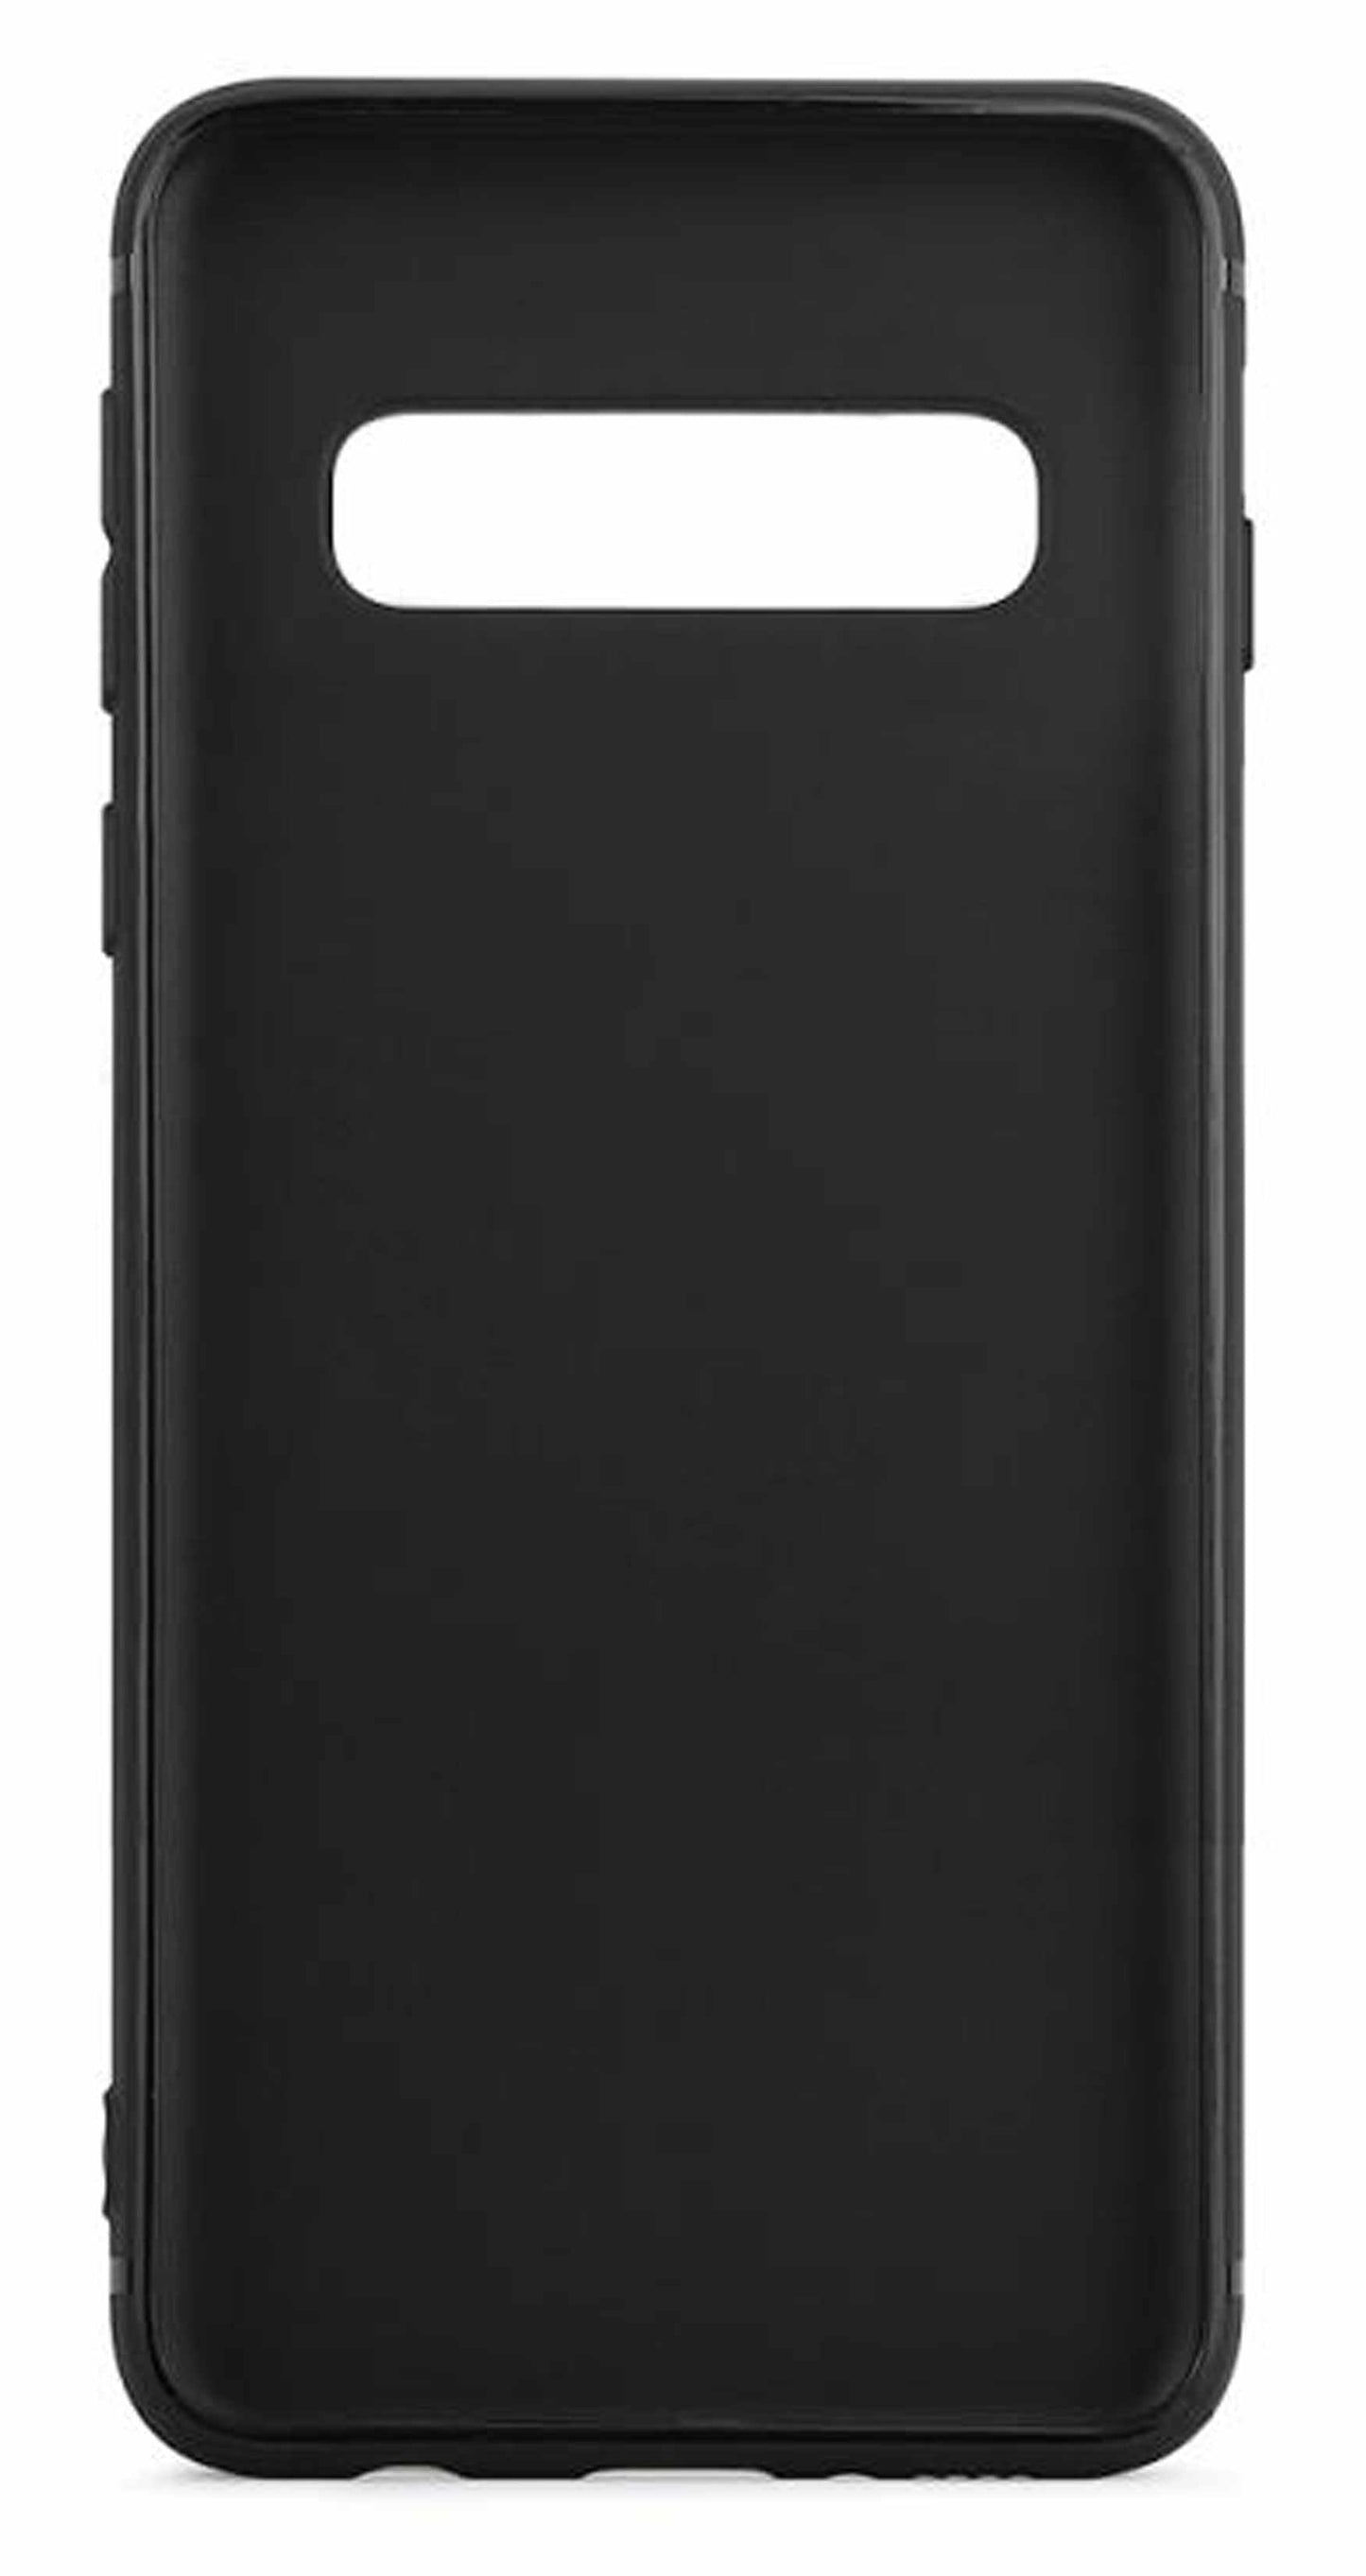 Gel Skin Case Black for Samsung Galaxy S10